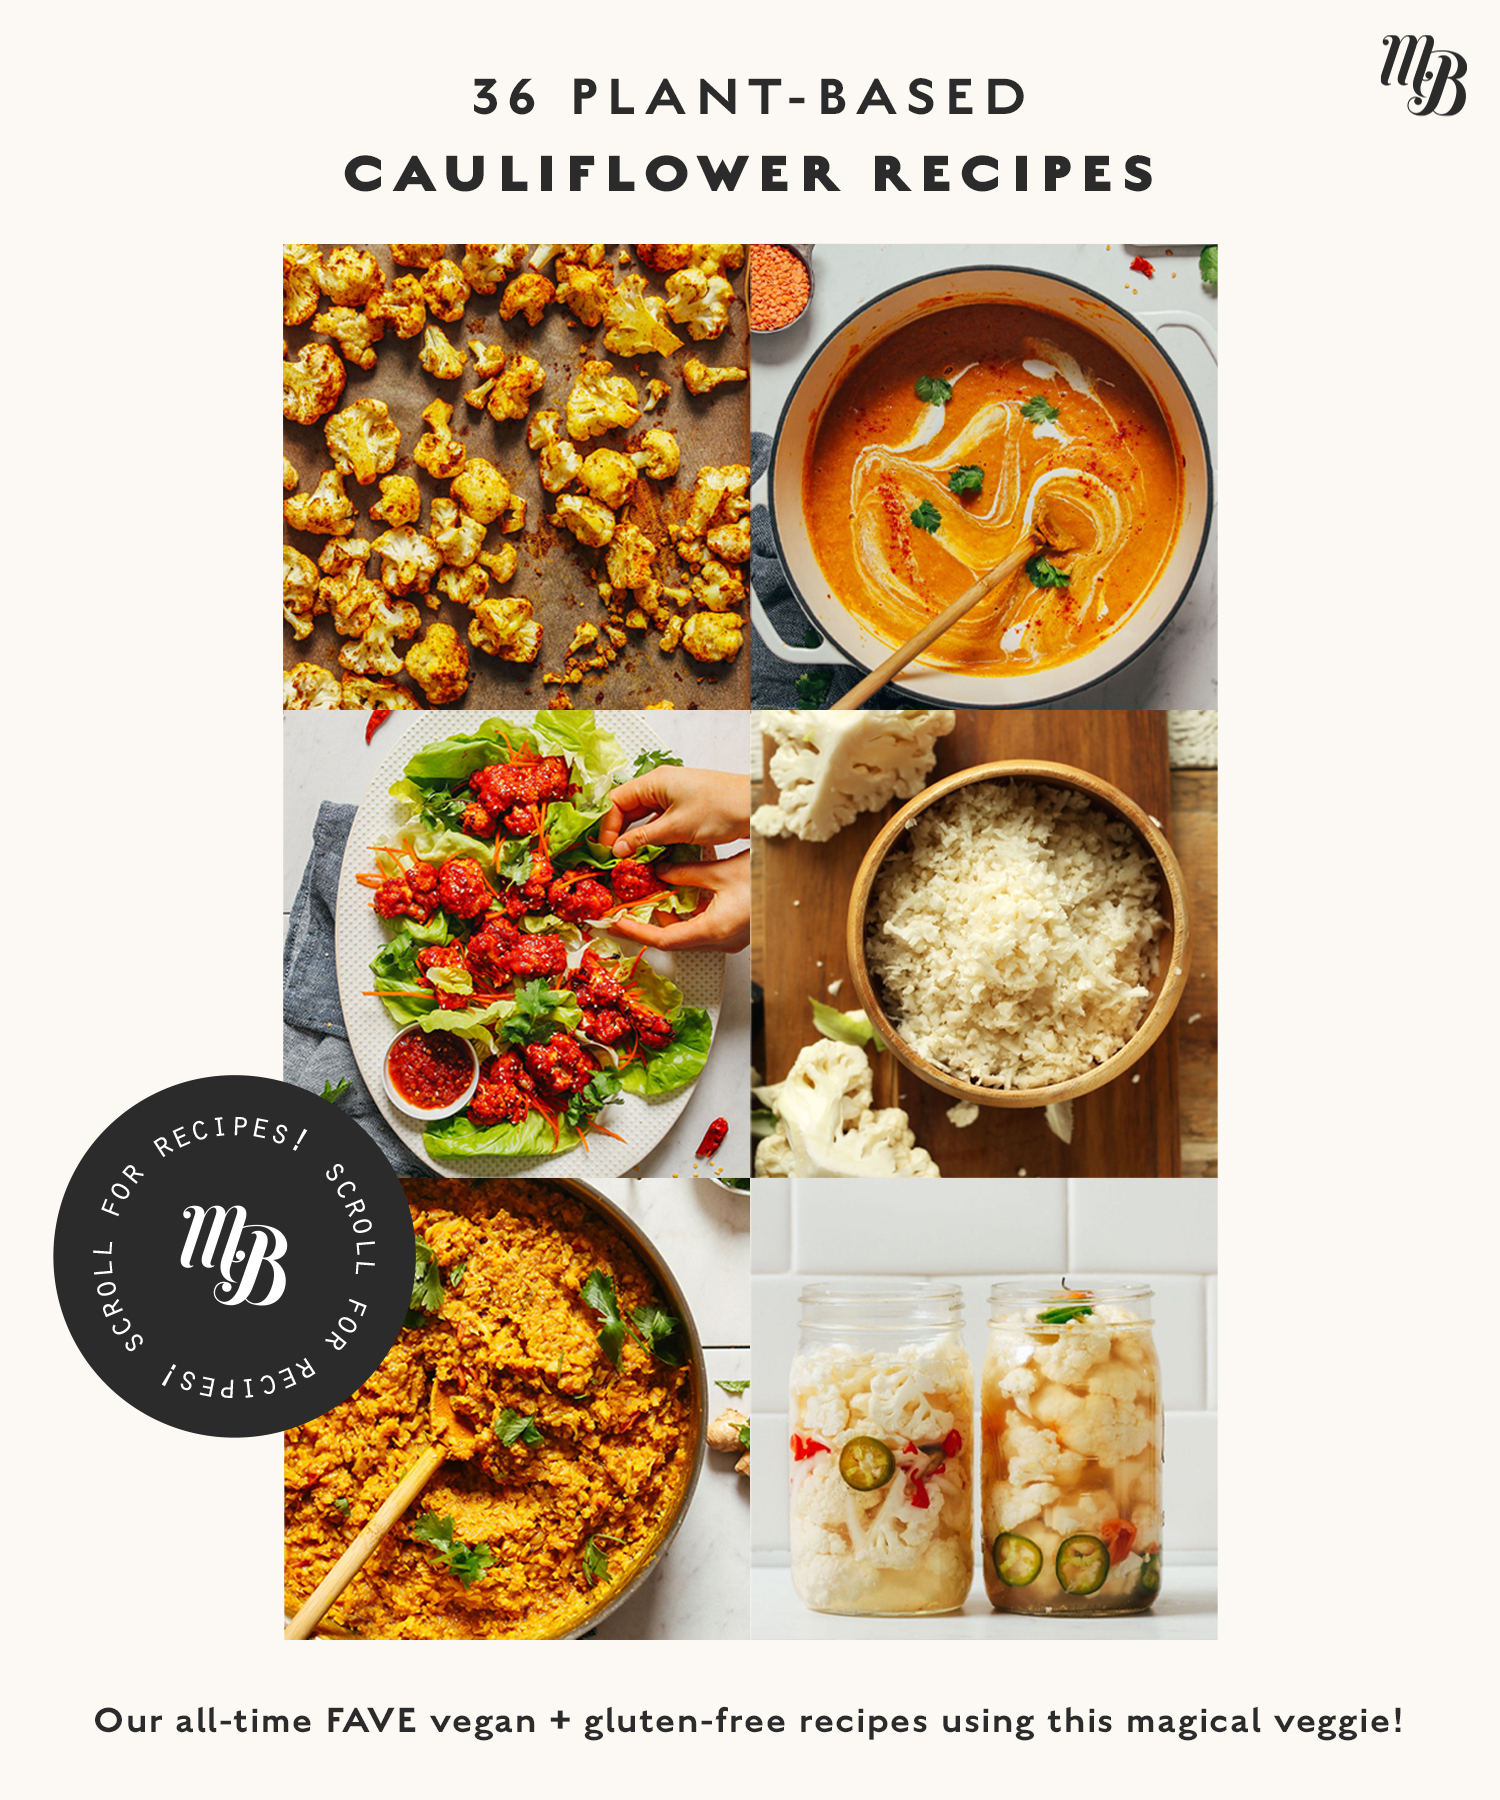 Assortment of plant-based cauliflower recipes